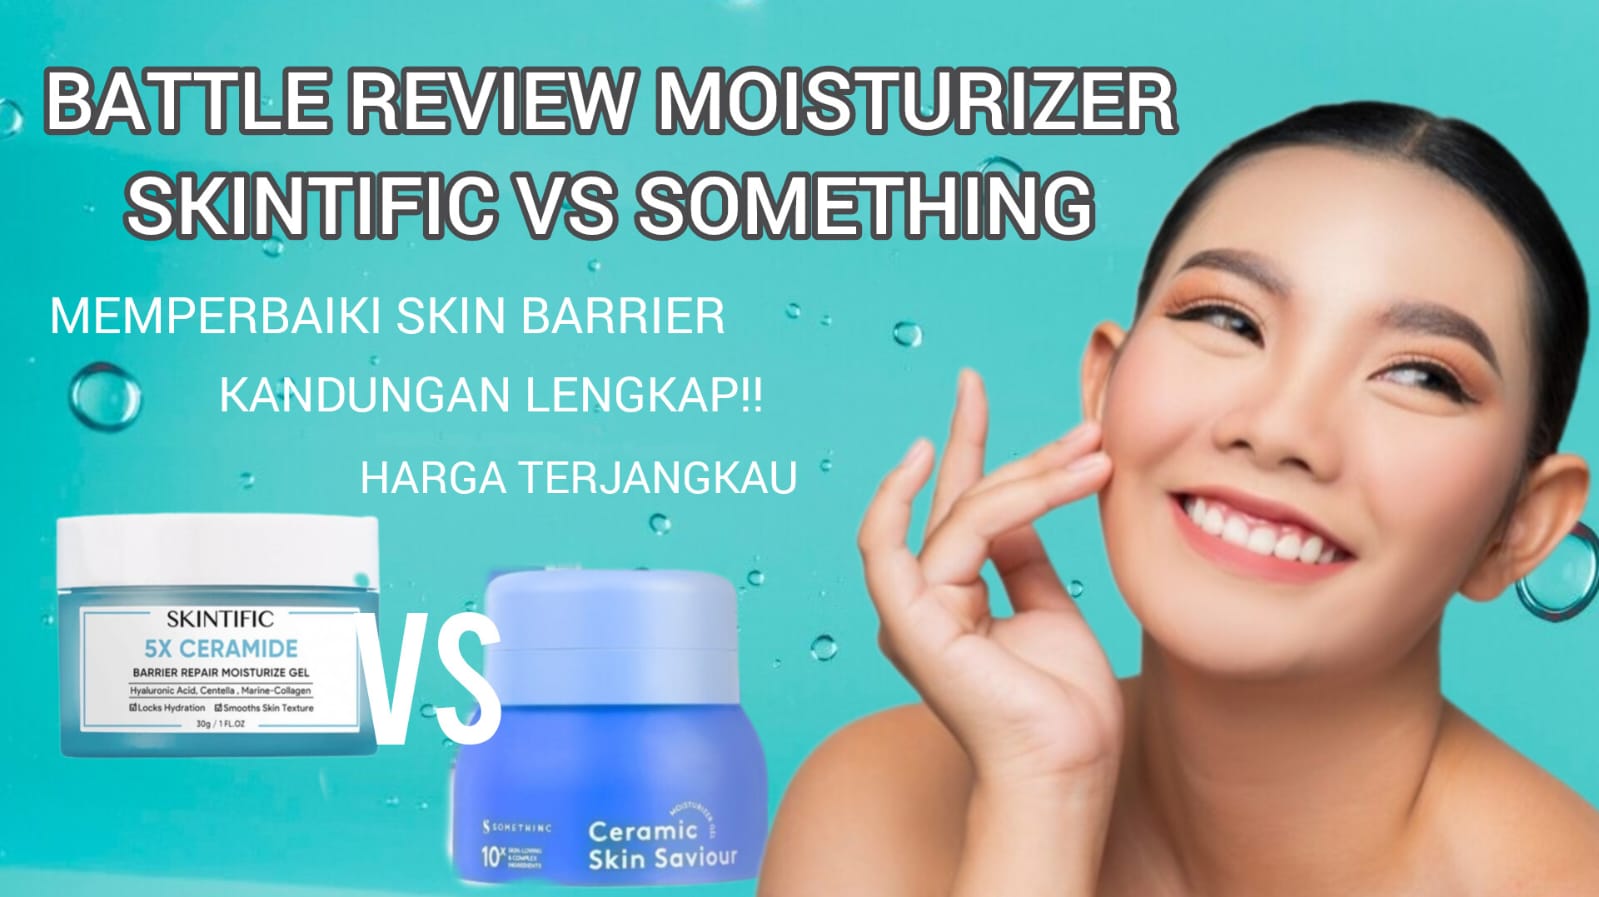 Sering Dibandingkan, Ini Battle Review Moisturaizer Skintific vs Somethinc, Spesialis Masalah Skin Barrier!